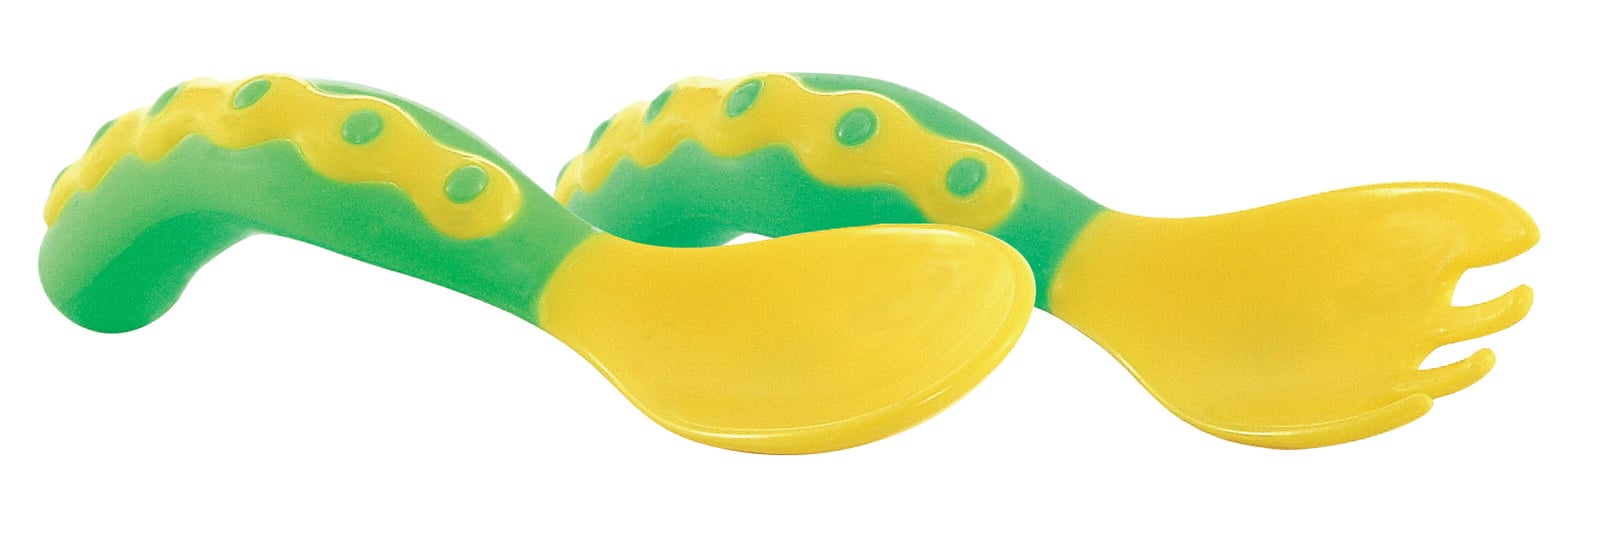 Nuby Starter Spoon & Fork 9m+Yellow/Green